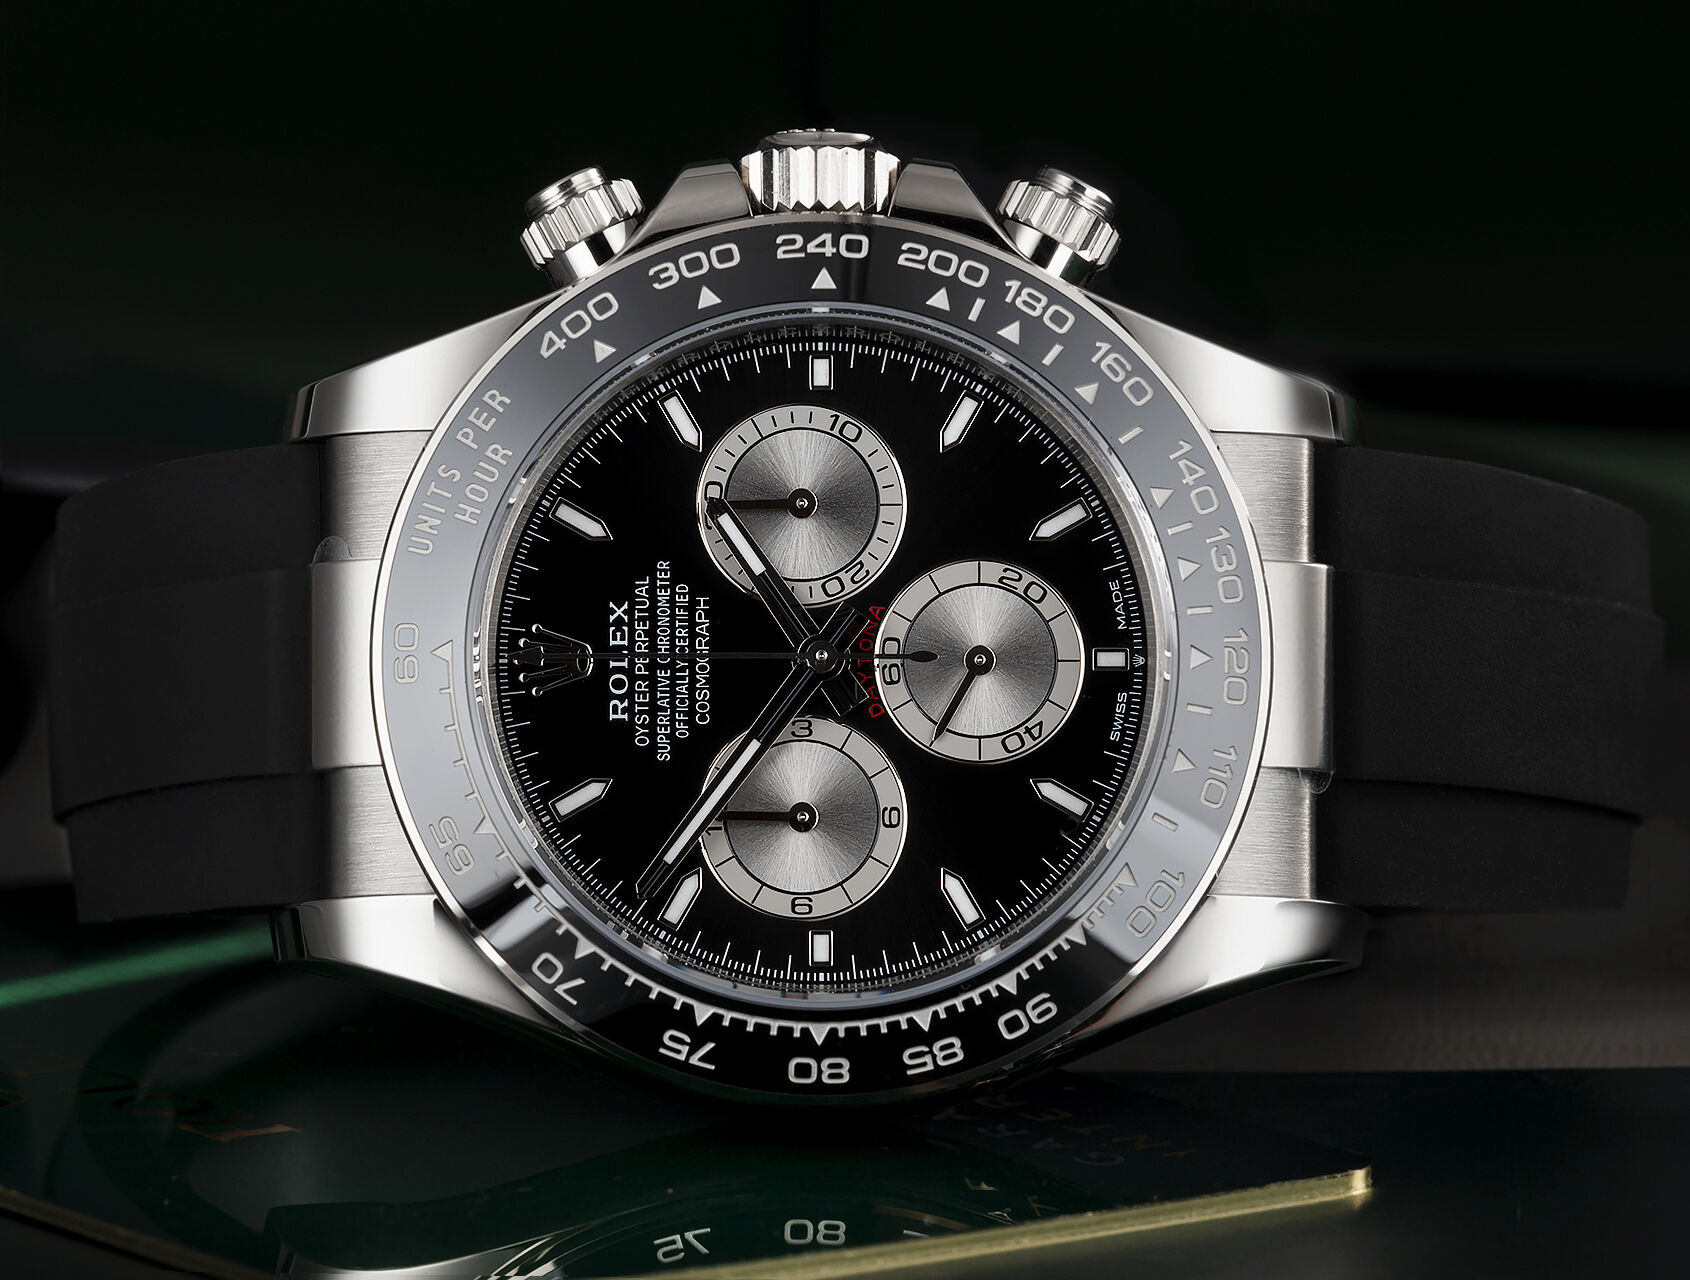 ref 126519LN | 126519LN - Brand New | Rolex Cosmograph Daytona